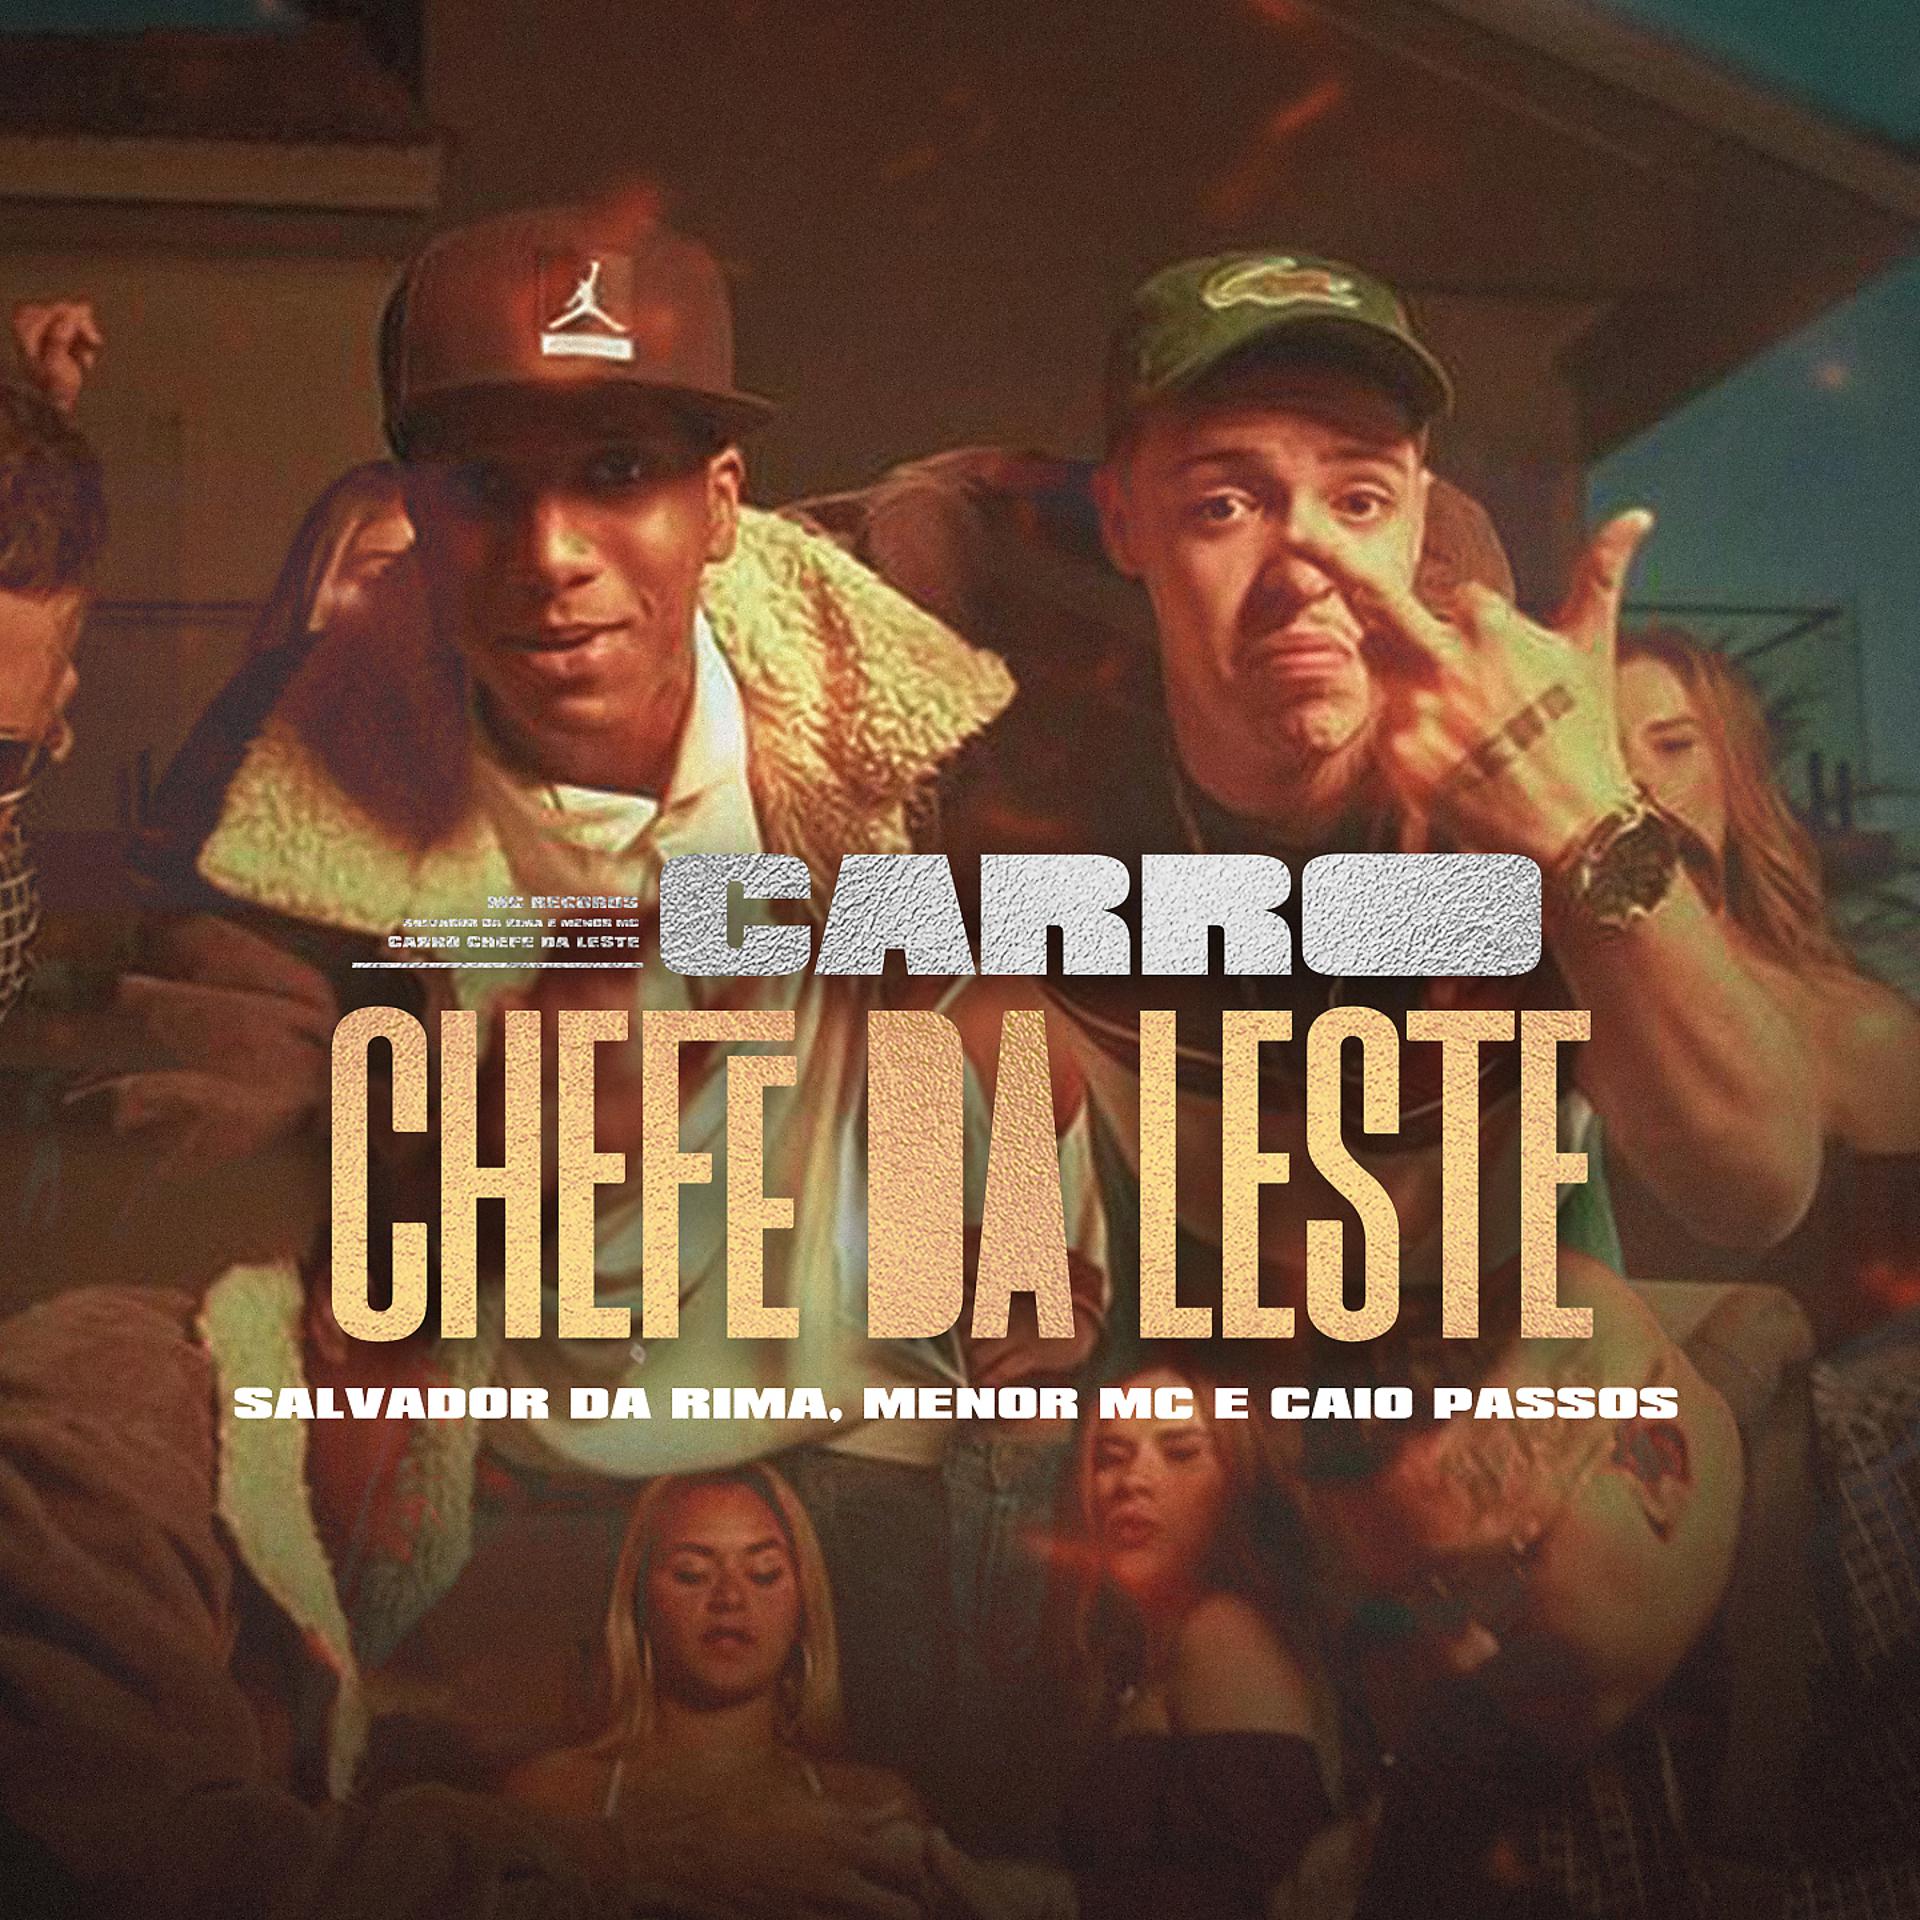 Постер альбома Carro Chefe da Leste